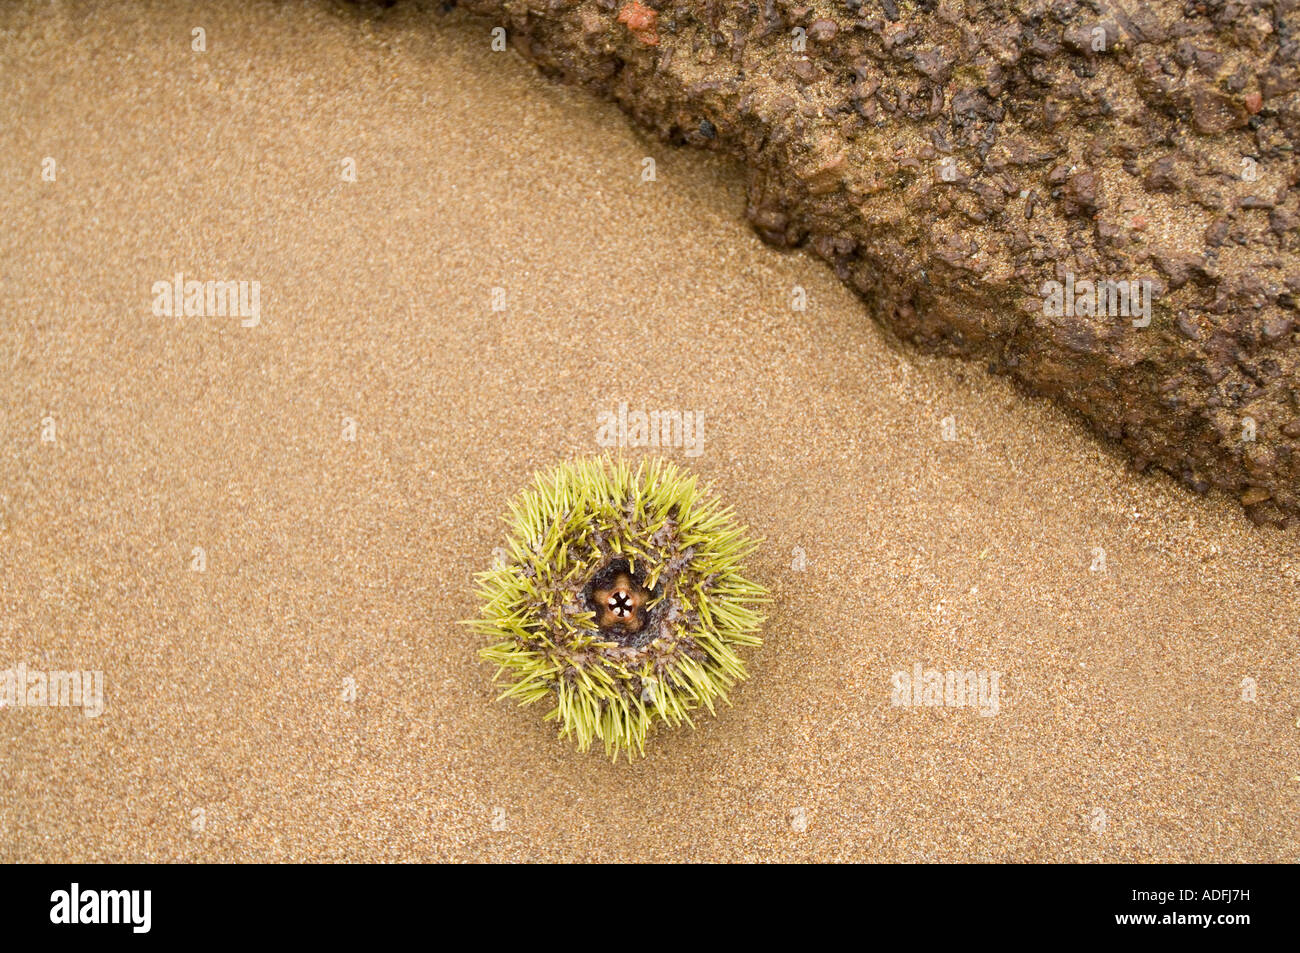 Green Sea Urchin (Lytechinus semituberculatus) washed out on sandy beach, Punta Cormoran, Floreana, Galapagos Islands, Ecuador Stock Photo